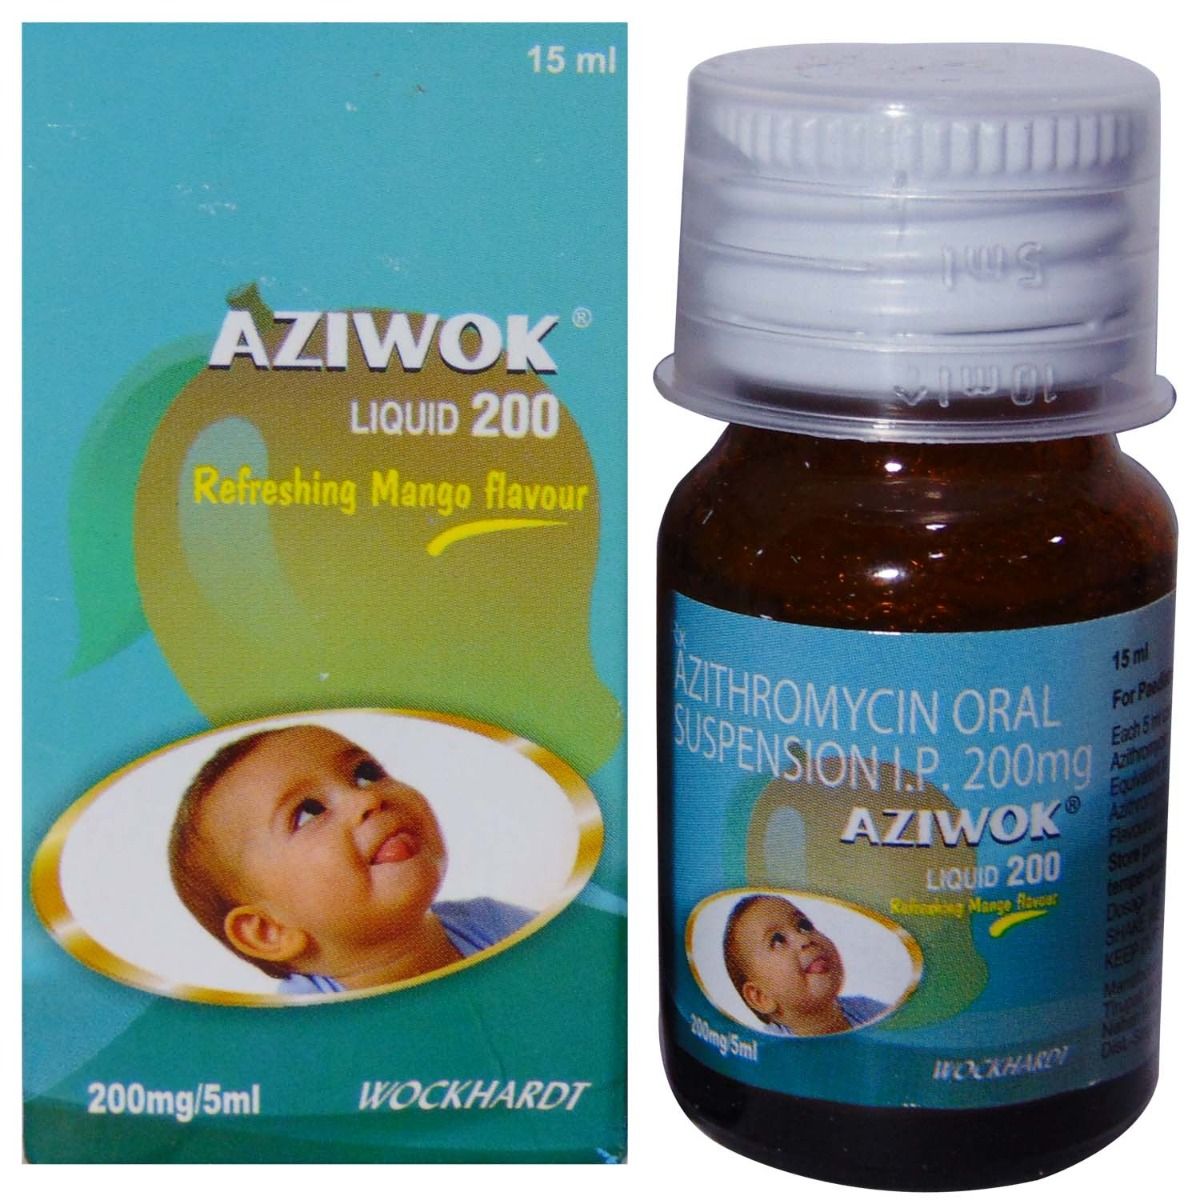 Aziwok 200 mg Liquid 15 ml, Pack of 1 Suspension